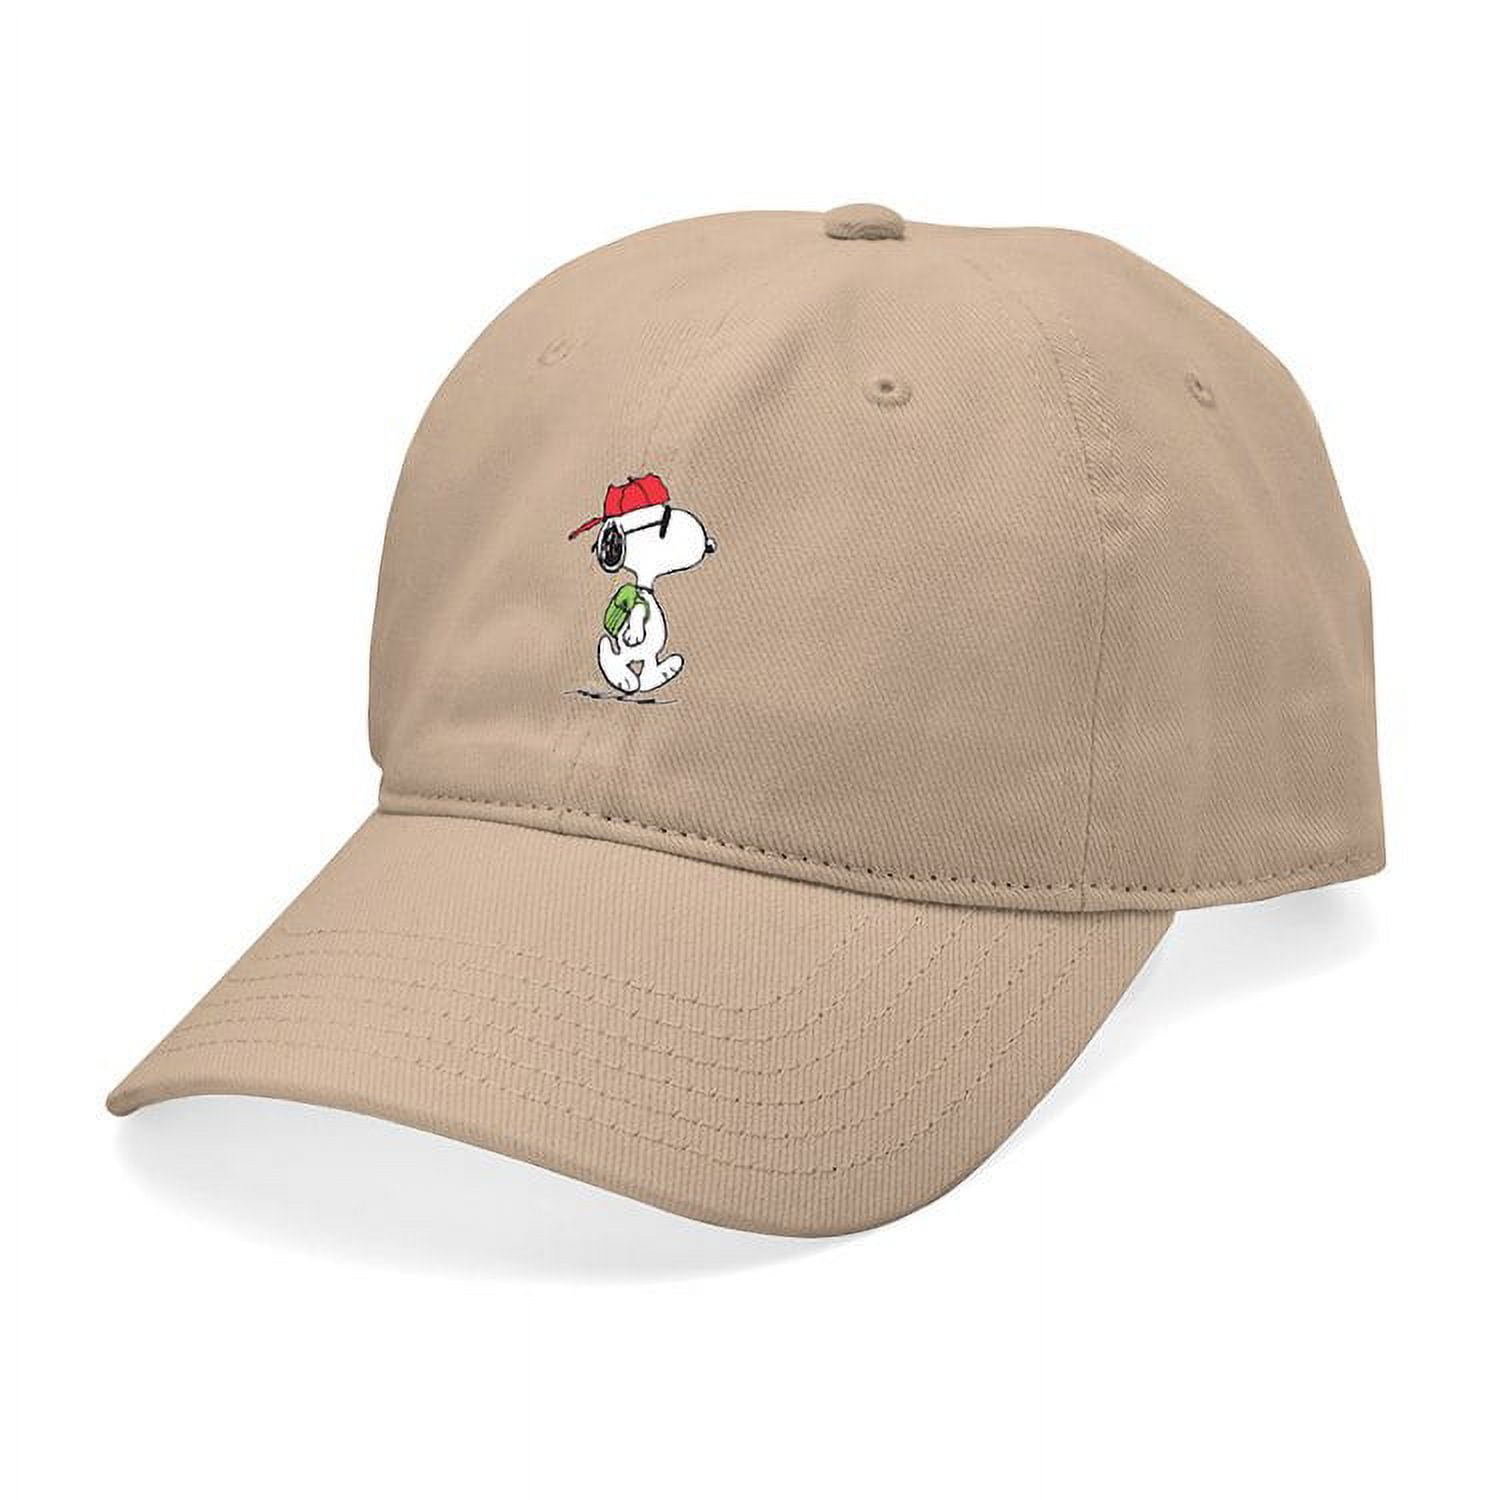 CafePress - Baseball Cool Hat Printed Adjustable Joe SNOOPY -